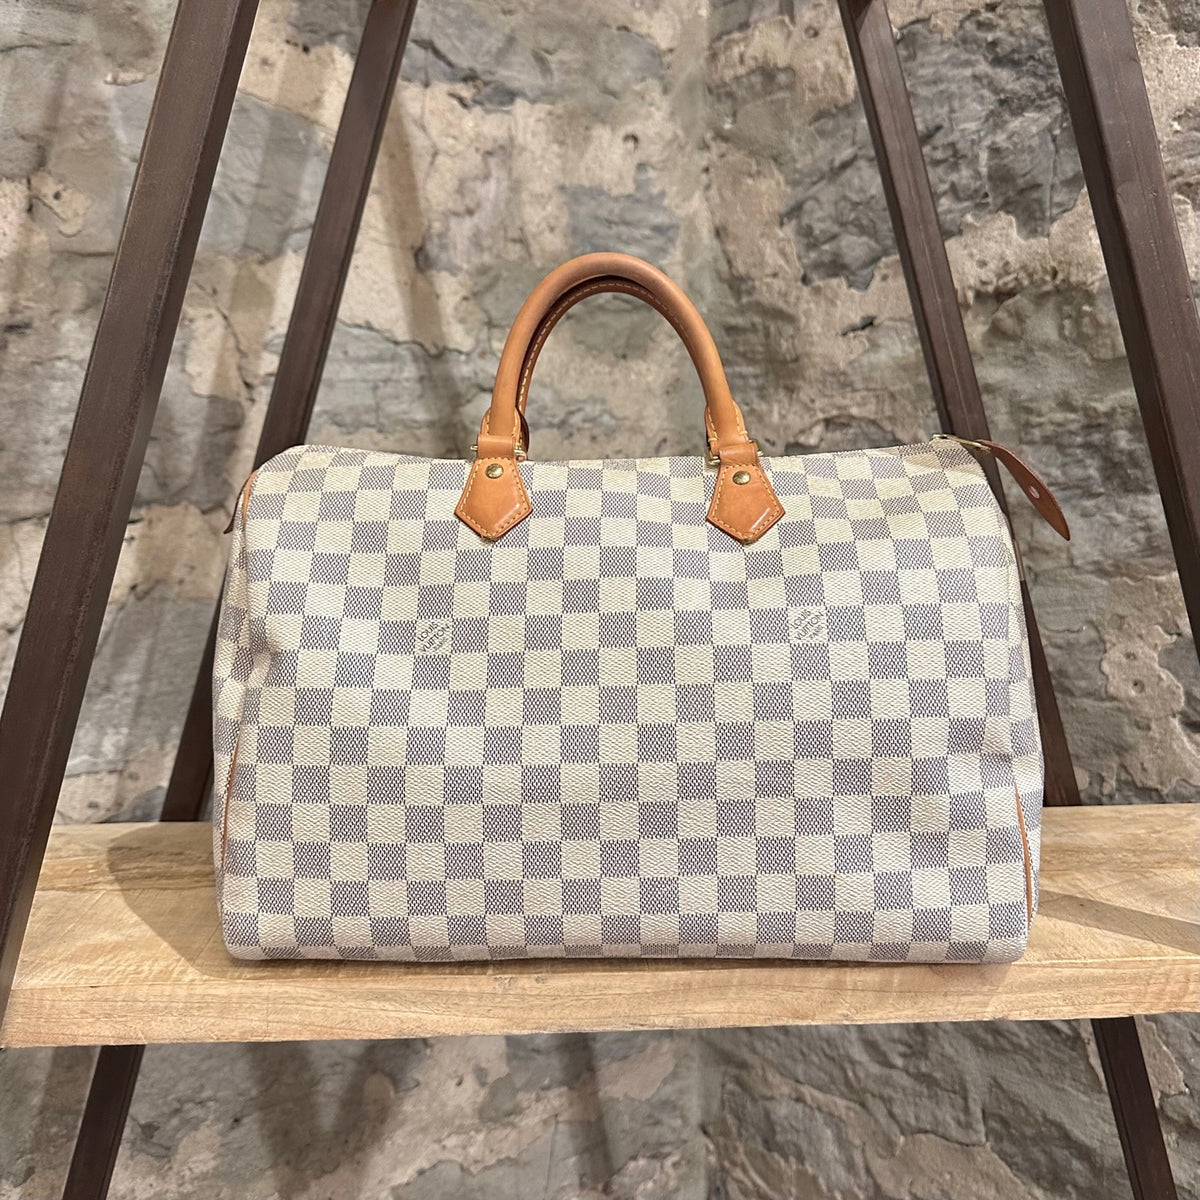 Louis Vuitton Speedy 35 Damier Azur Satchel Bag